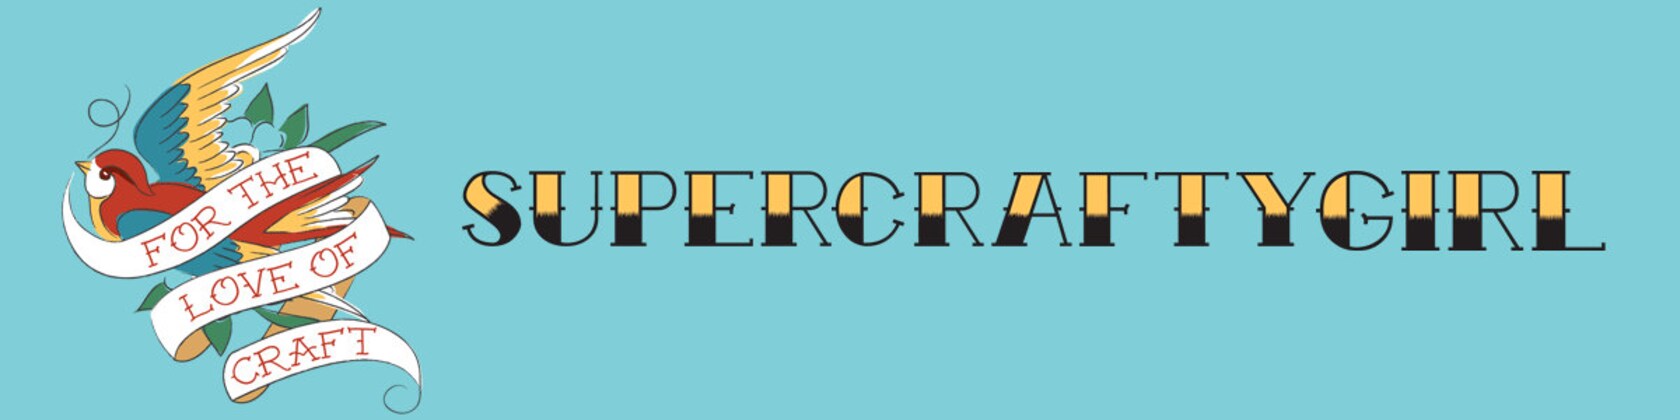 Image result for supercraftygirl logo